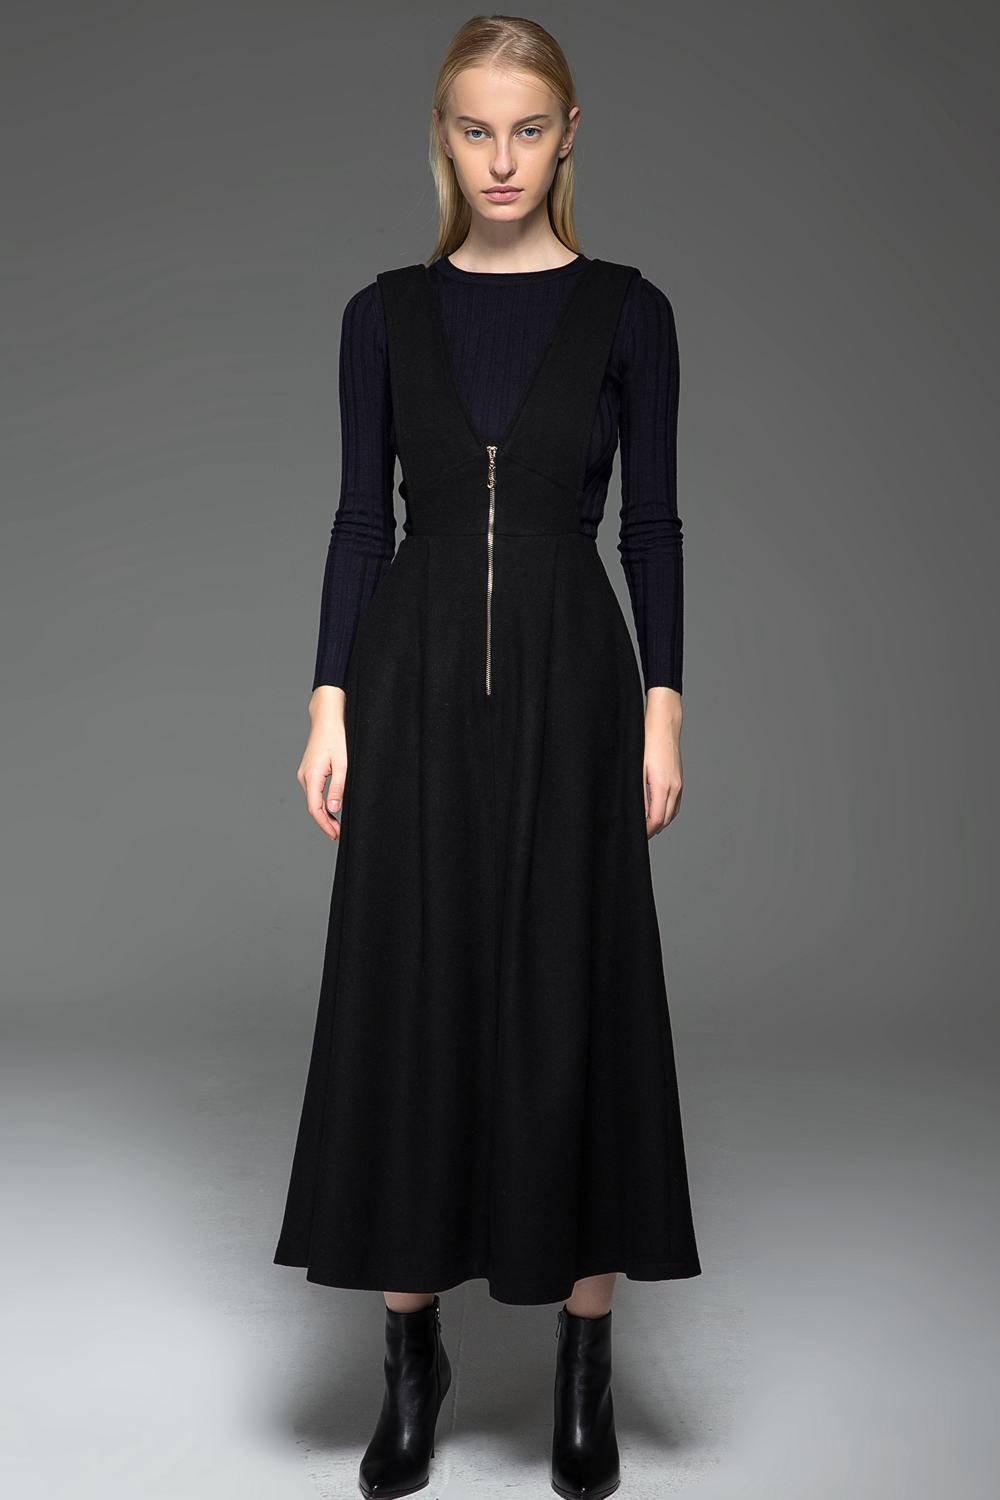 Vintage Valentino Boutique Black Wool Crepe Dress sz 6